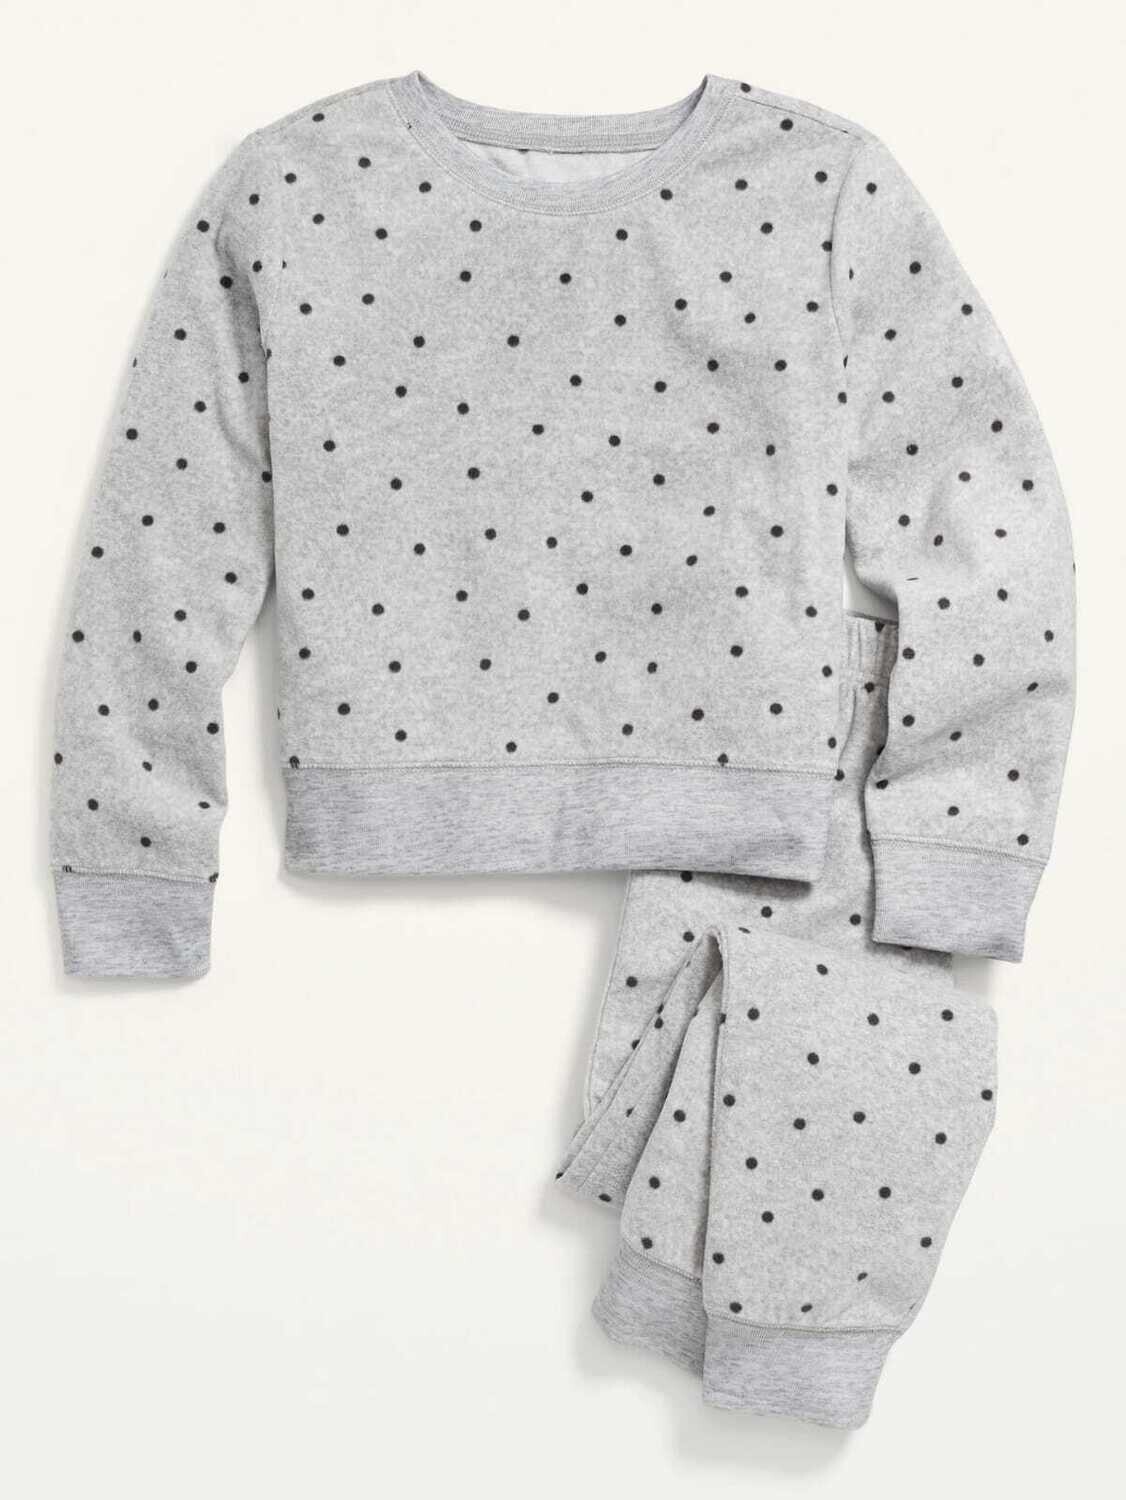 Old Navy Printed Microfleece Pajama 2-Piece Top & Joggers Set For Girls